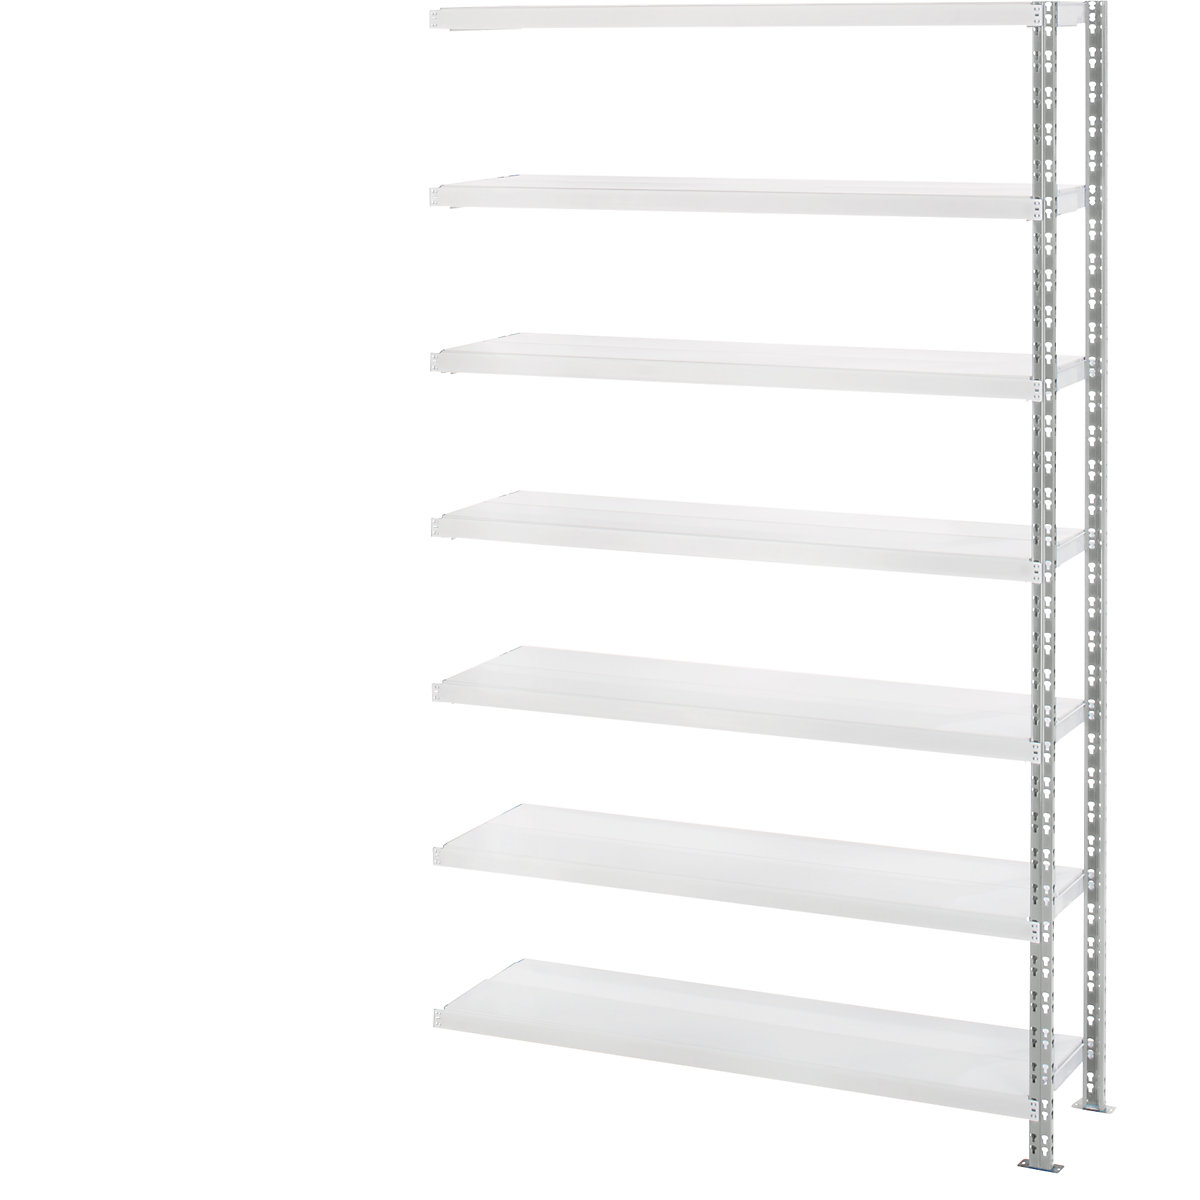 Wide span shelf unit with sheet steel shelves, depth 400 mm, extension shelf unit, HxW 2522 x 1525 mm